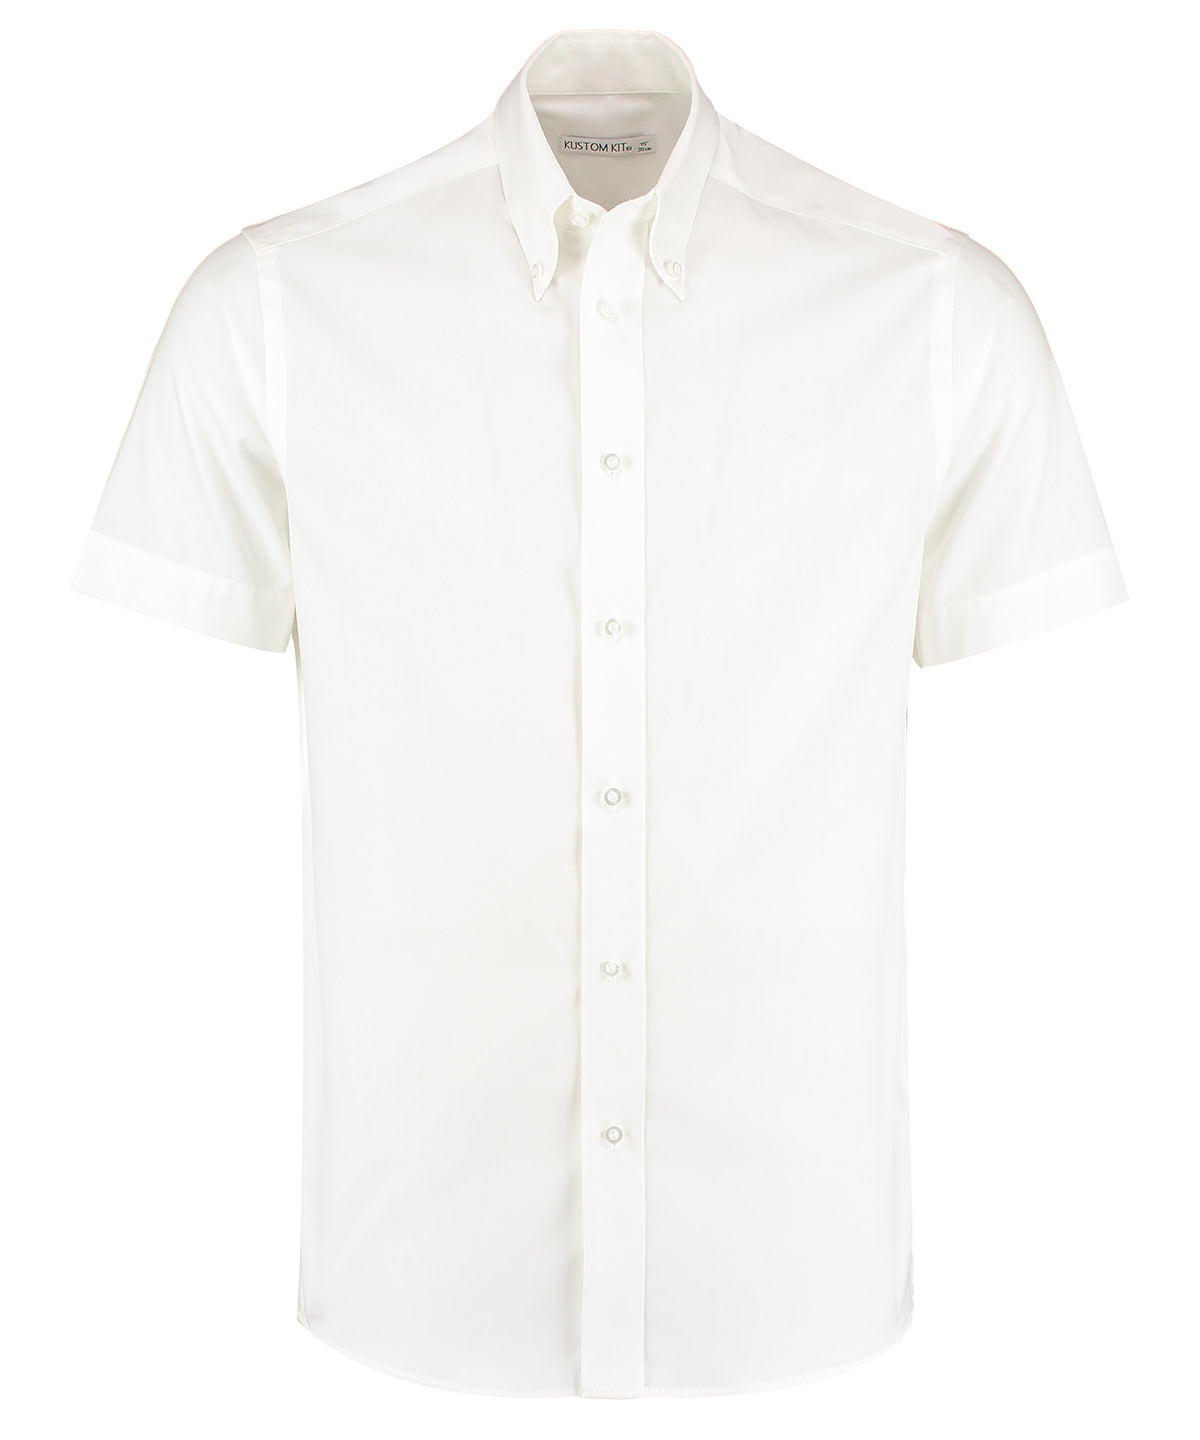 Personalised Shirts - Black Kustom Kit Premium Oxford shirt short-sleeved (tailored fit)